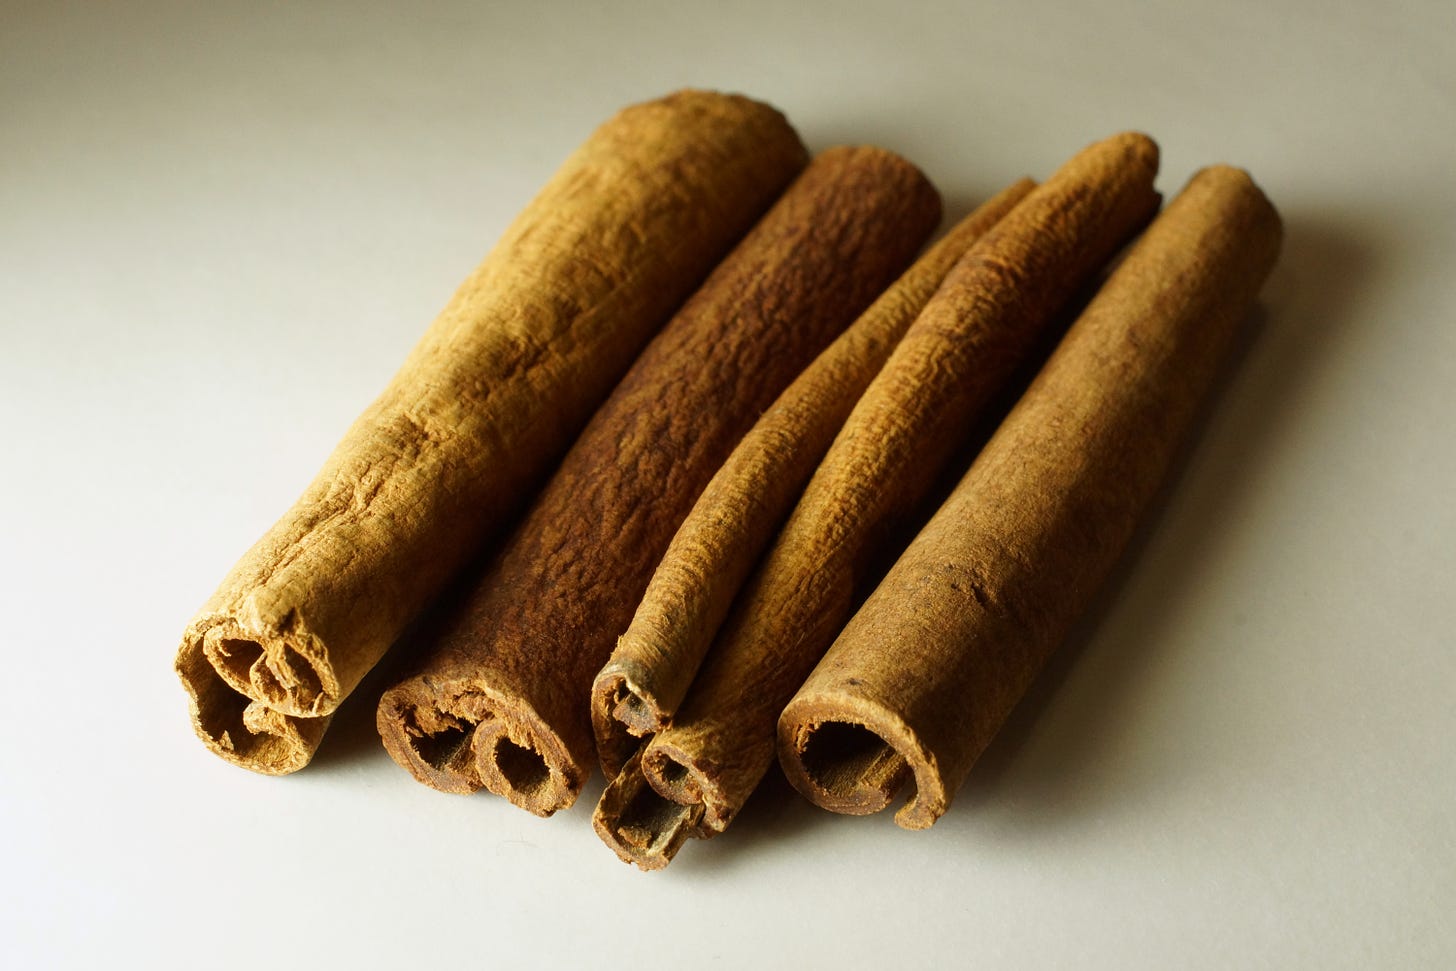 File:Cinnamon sticks.jpg - Wikimedia Commons